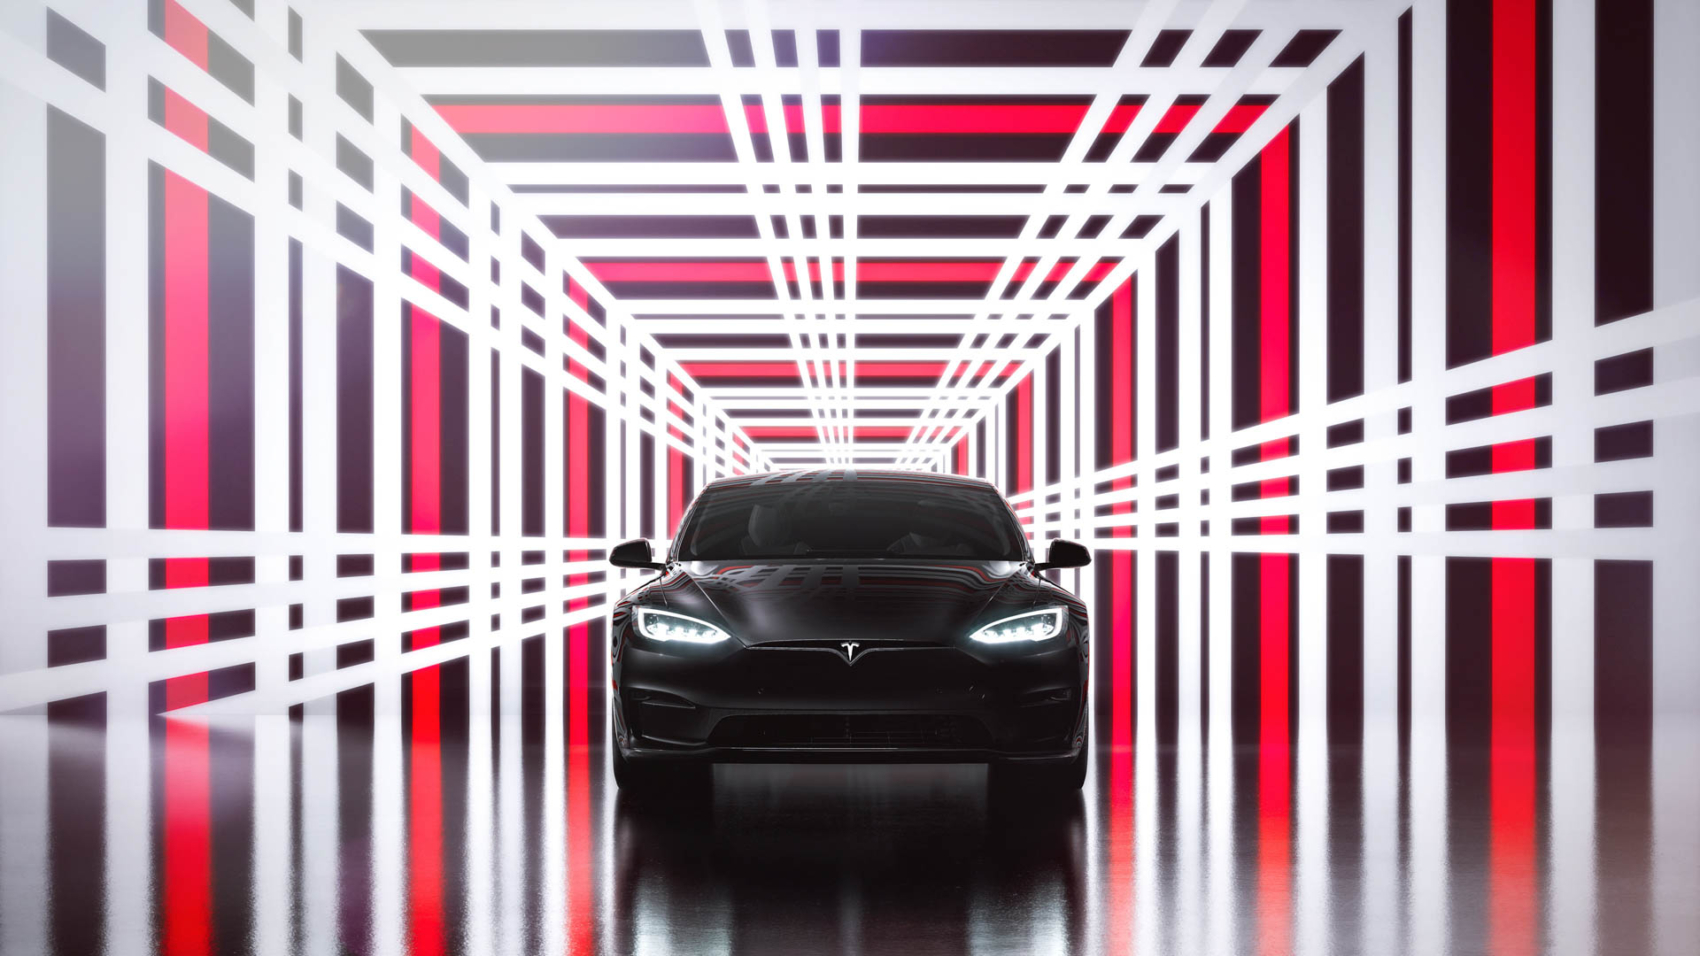 Image provided by Tesla Inc.